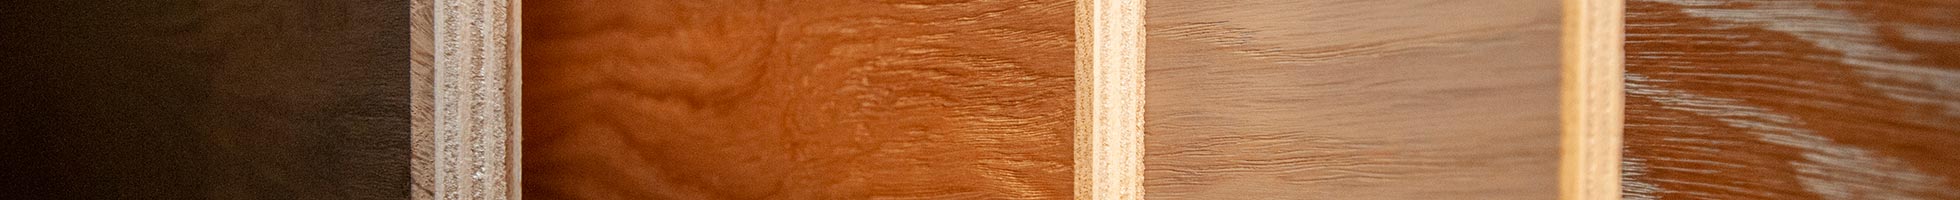 Prefinished Hardwood Flooring, How To Deep Clean Prefinished Hardwood Floors